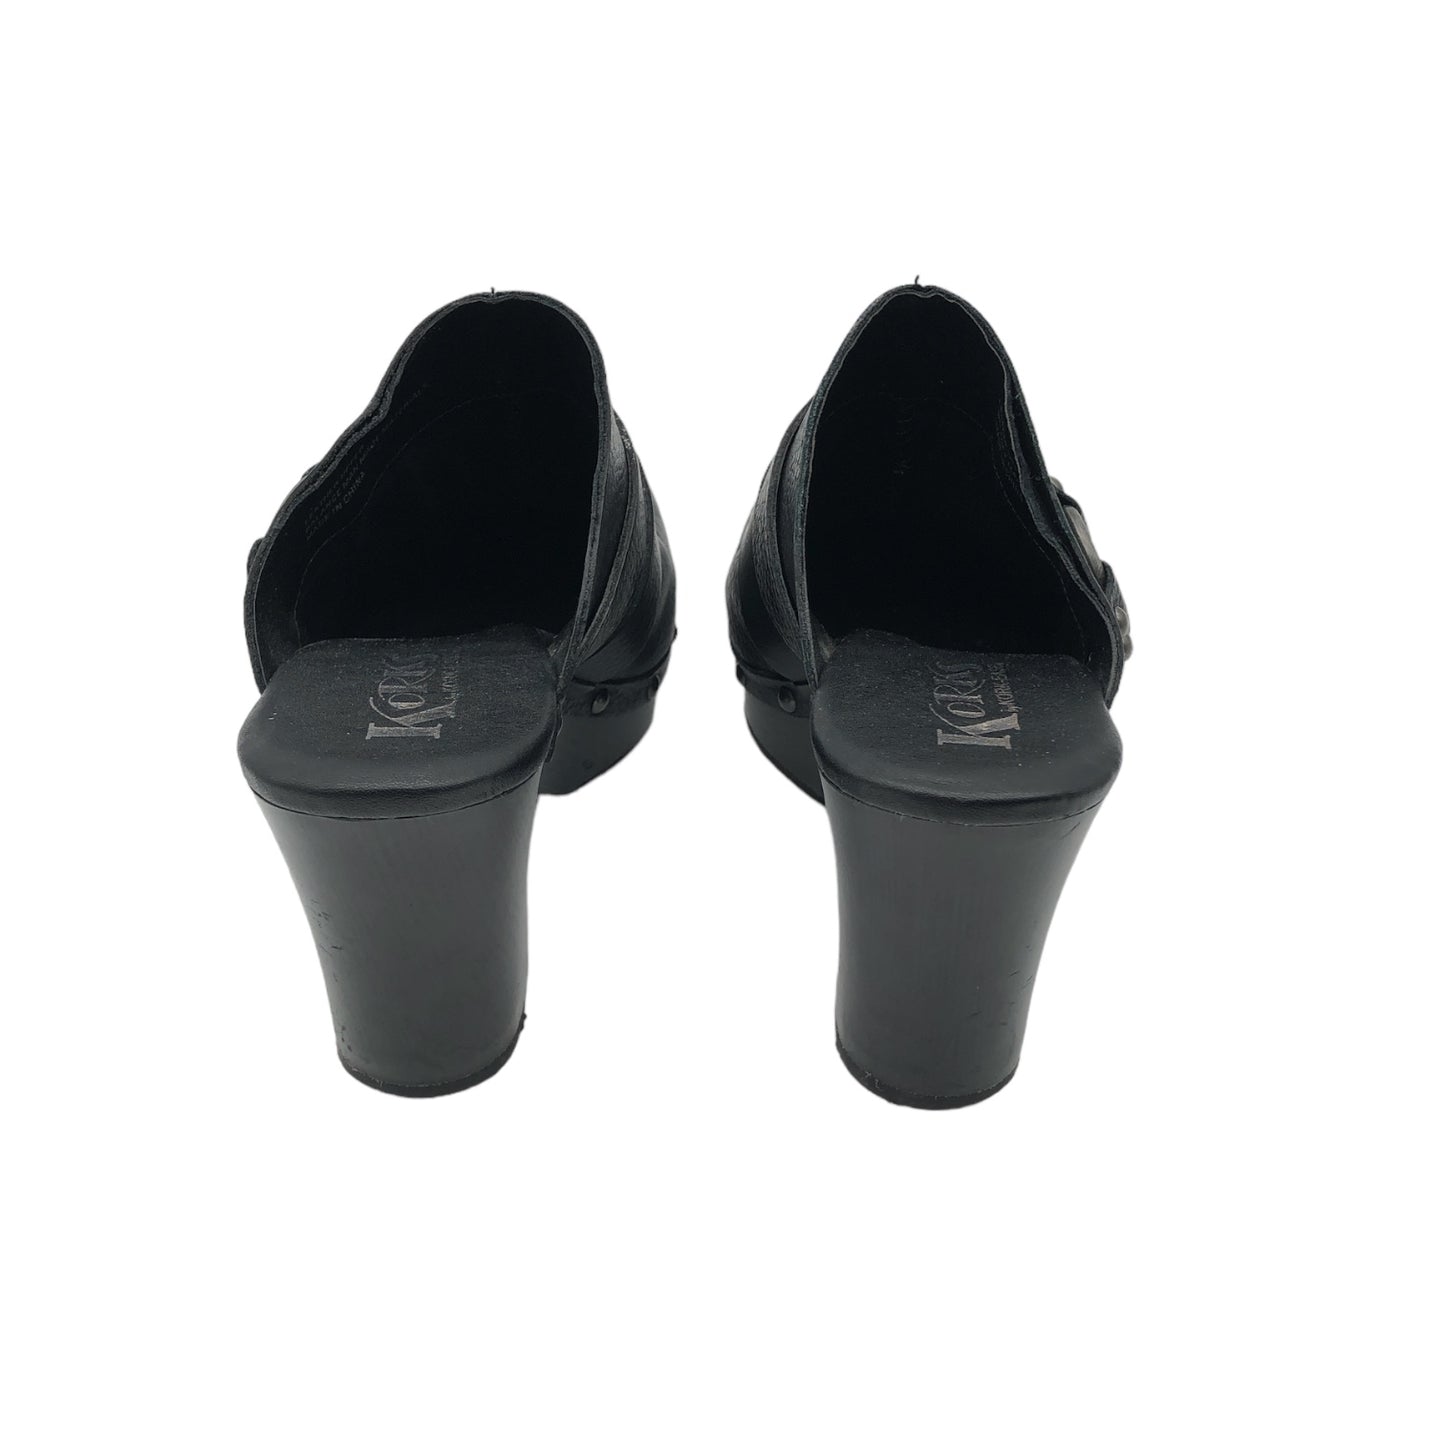 Sandals Heels Block By Kork Ease  Size: 7.5